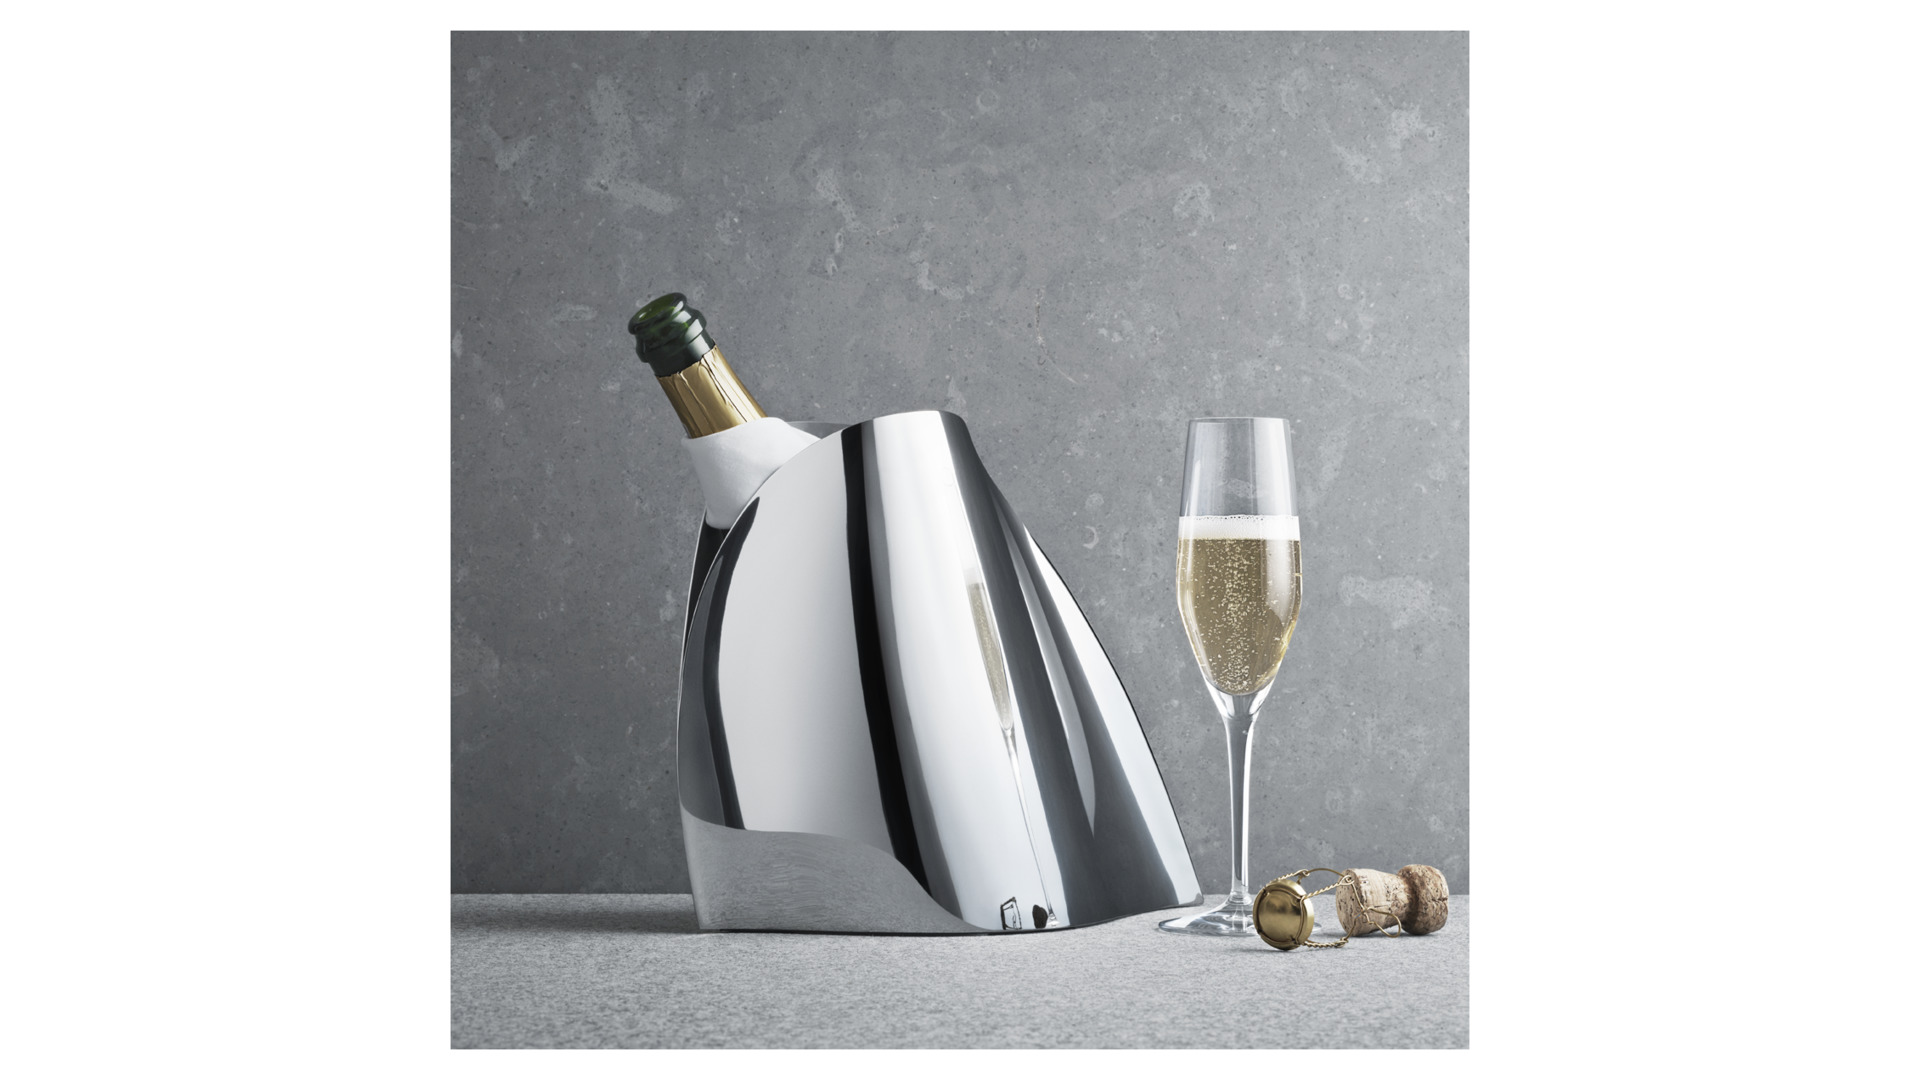 Кулер для шампанского Georg Jensen Привилегия 22,5 см